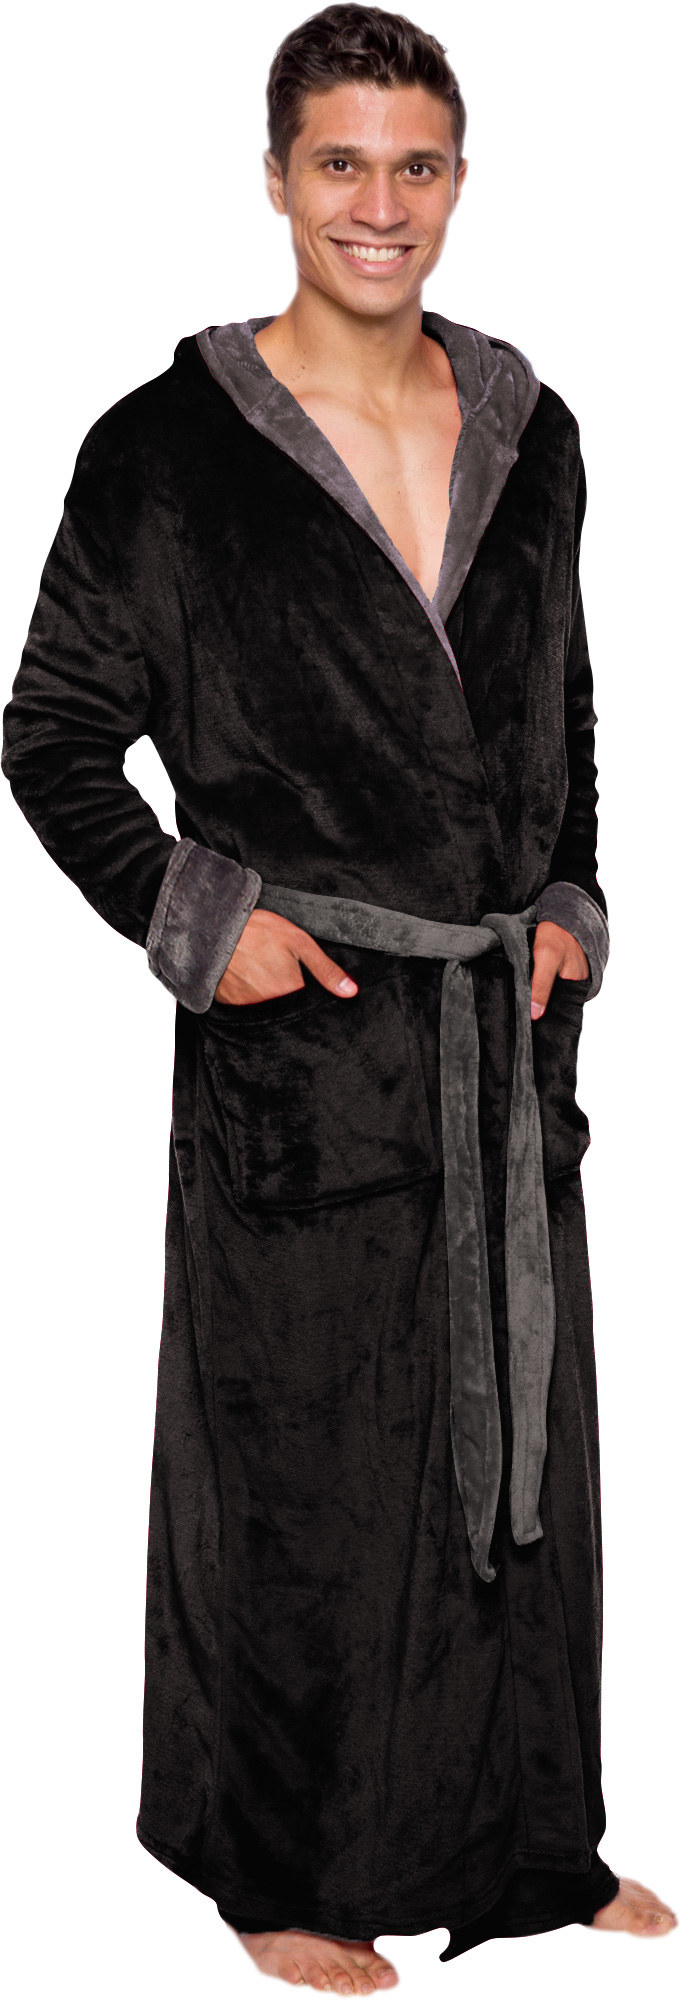 An image of a model wearing a black fleece bathrobe